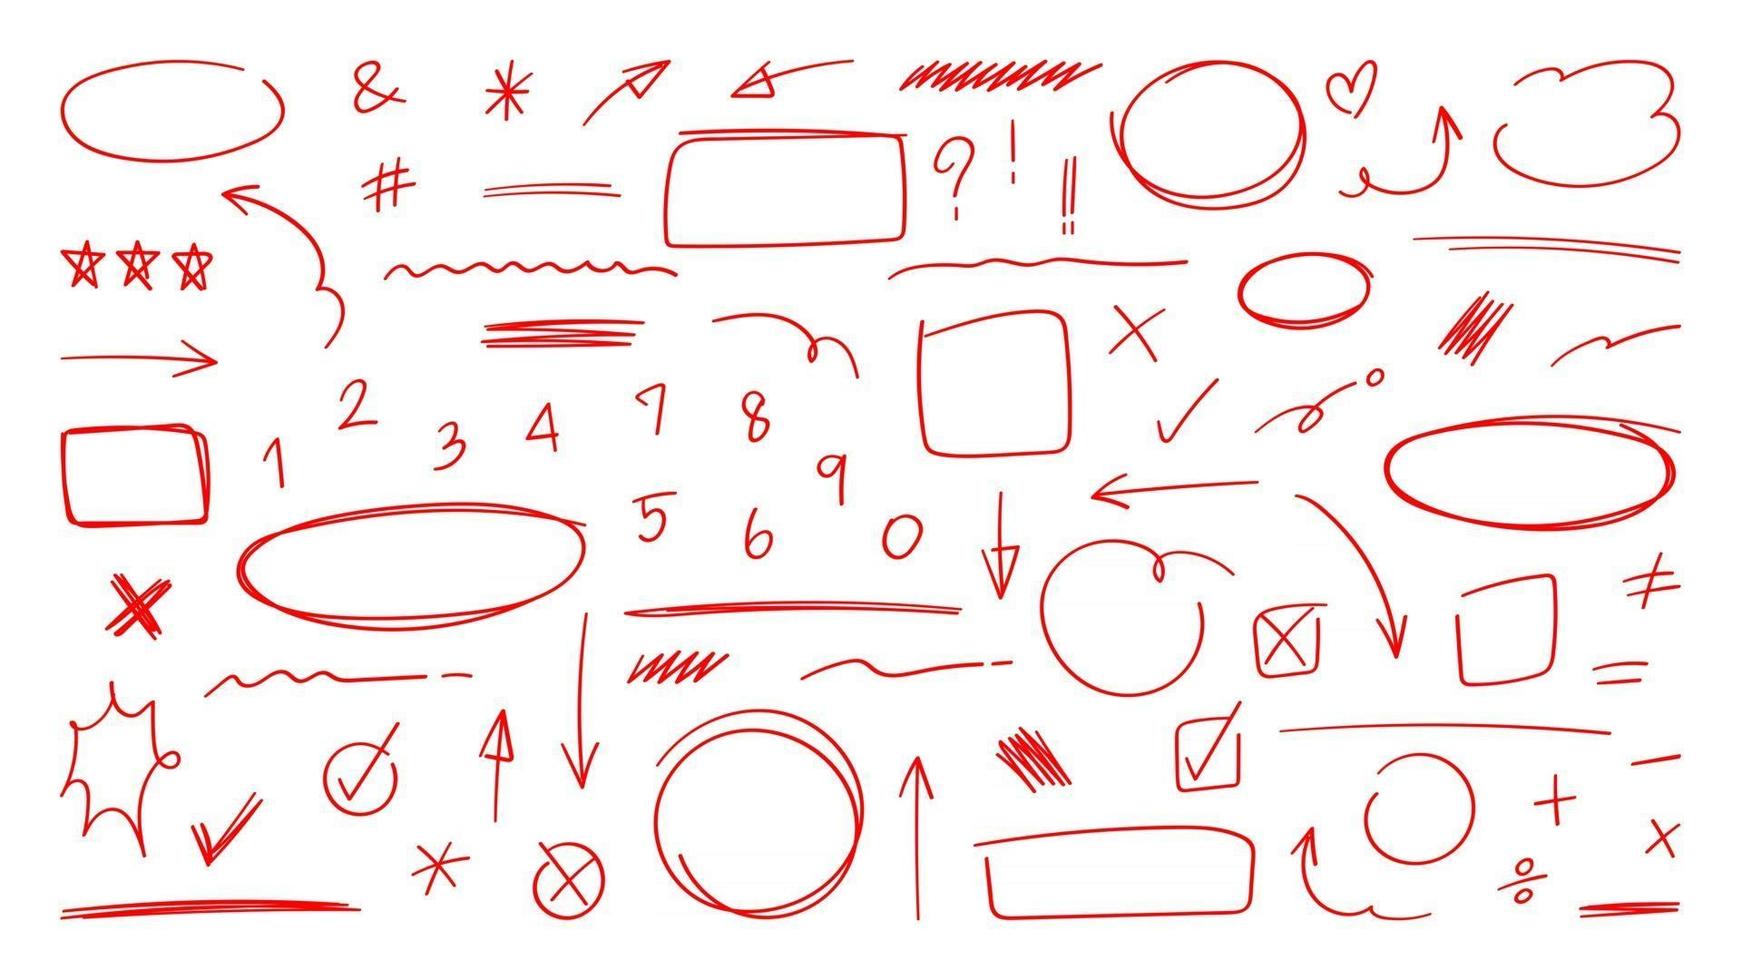 Red arrows design vector.  Doodle Marker hand drawn shapes vector illustration.